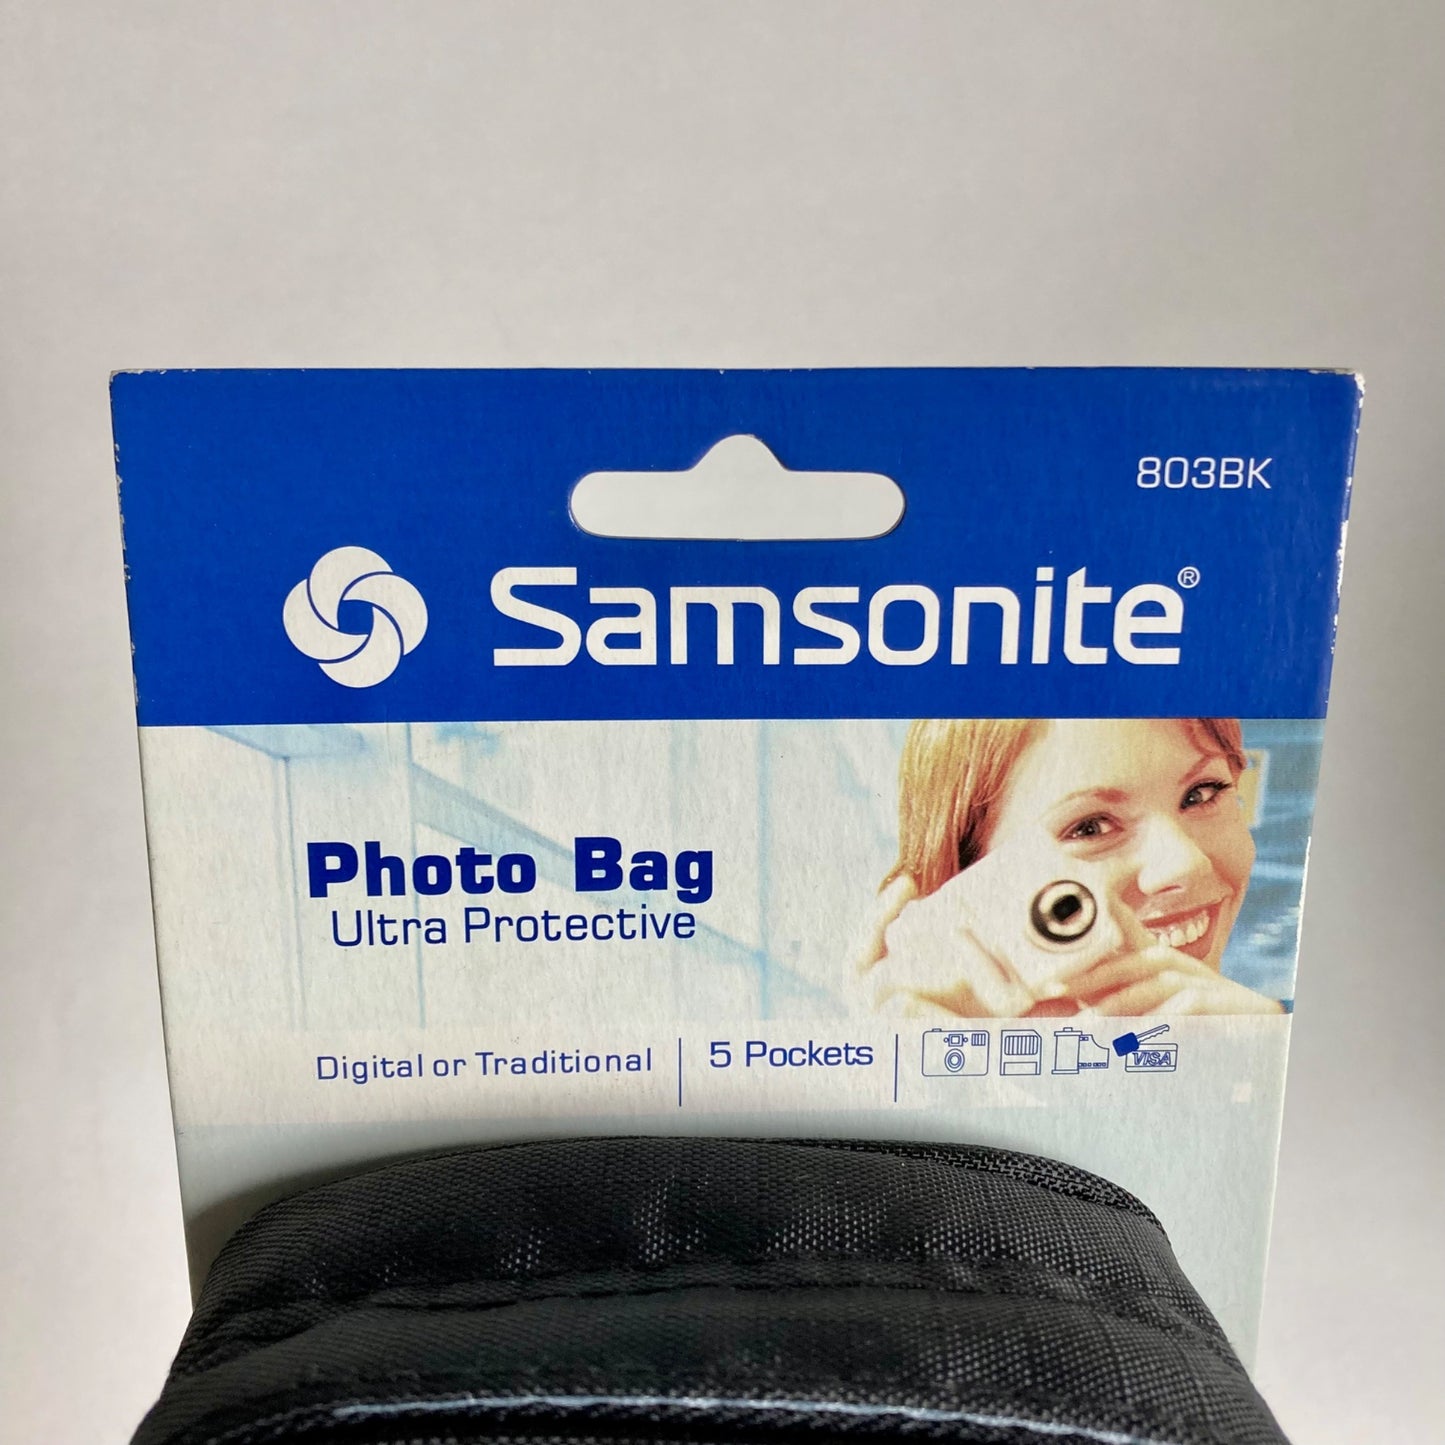 Samsonite 803BK Photo Bag 5-Pocket Small Camera Case w/ Shoulder Strap NEW!